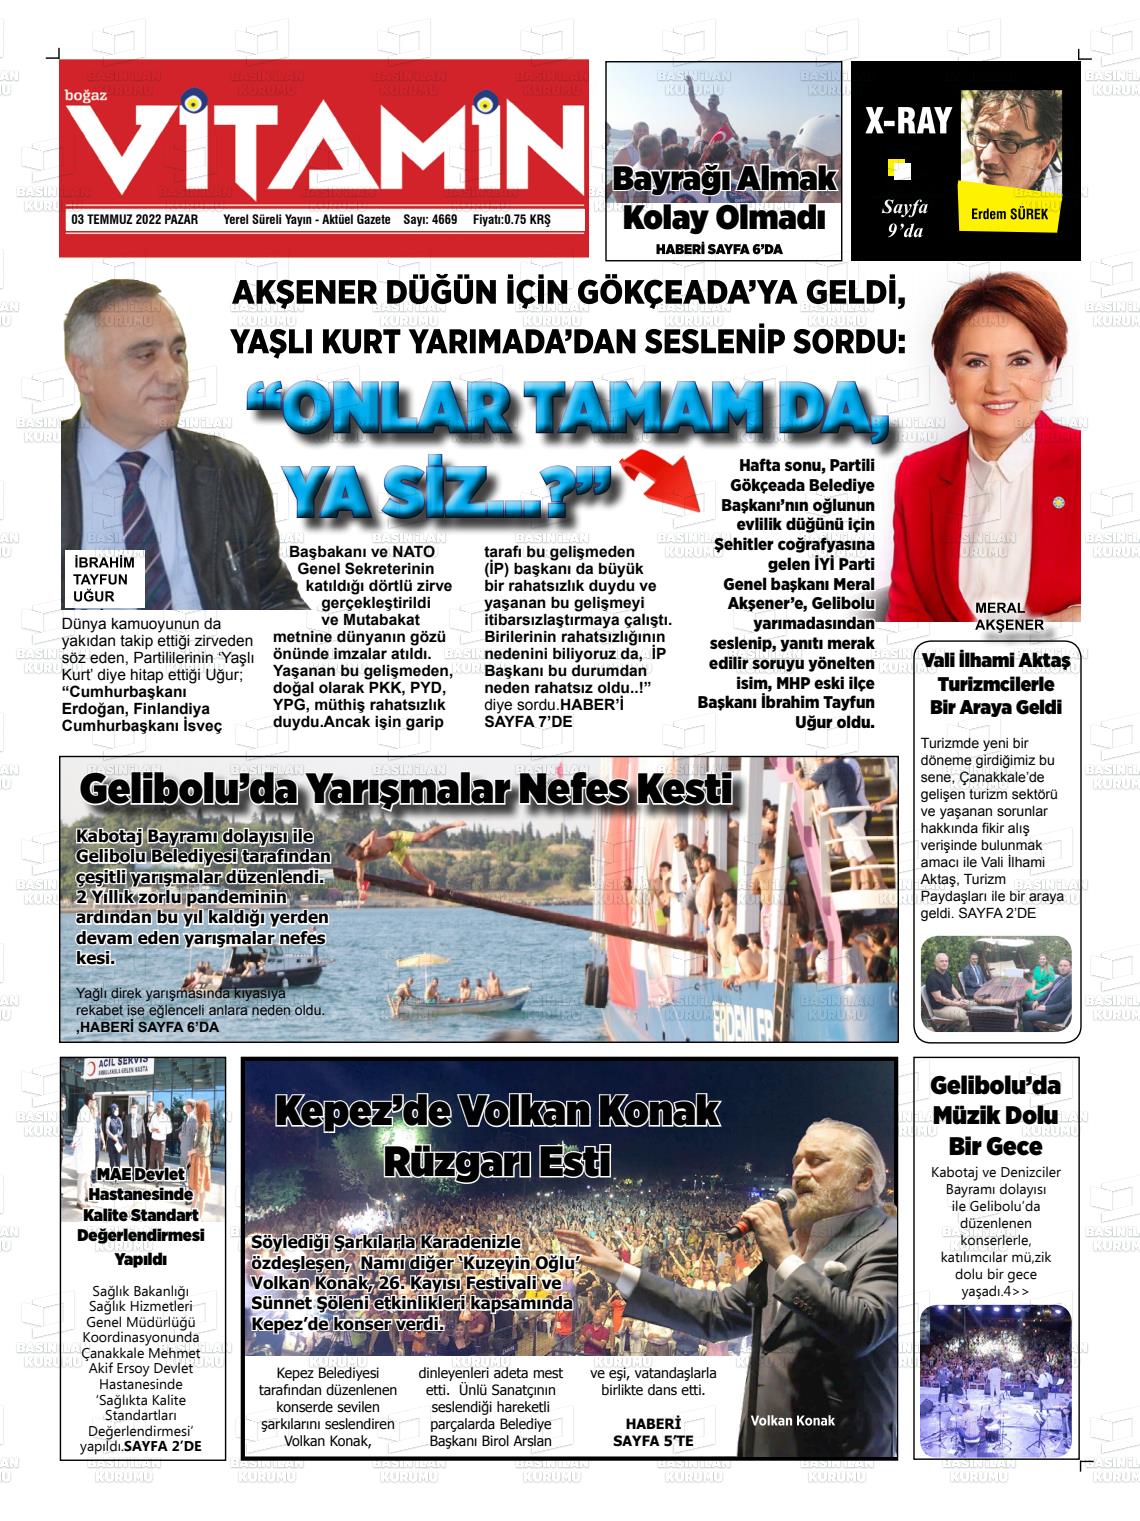 03 Temmuz 2022 Gazete Vitamin Gazete Manşeti